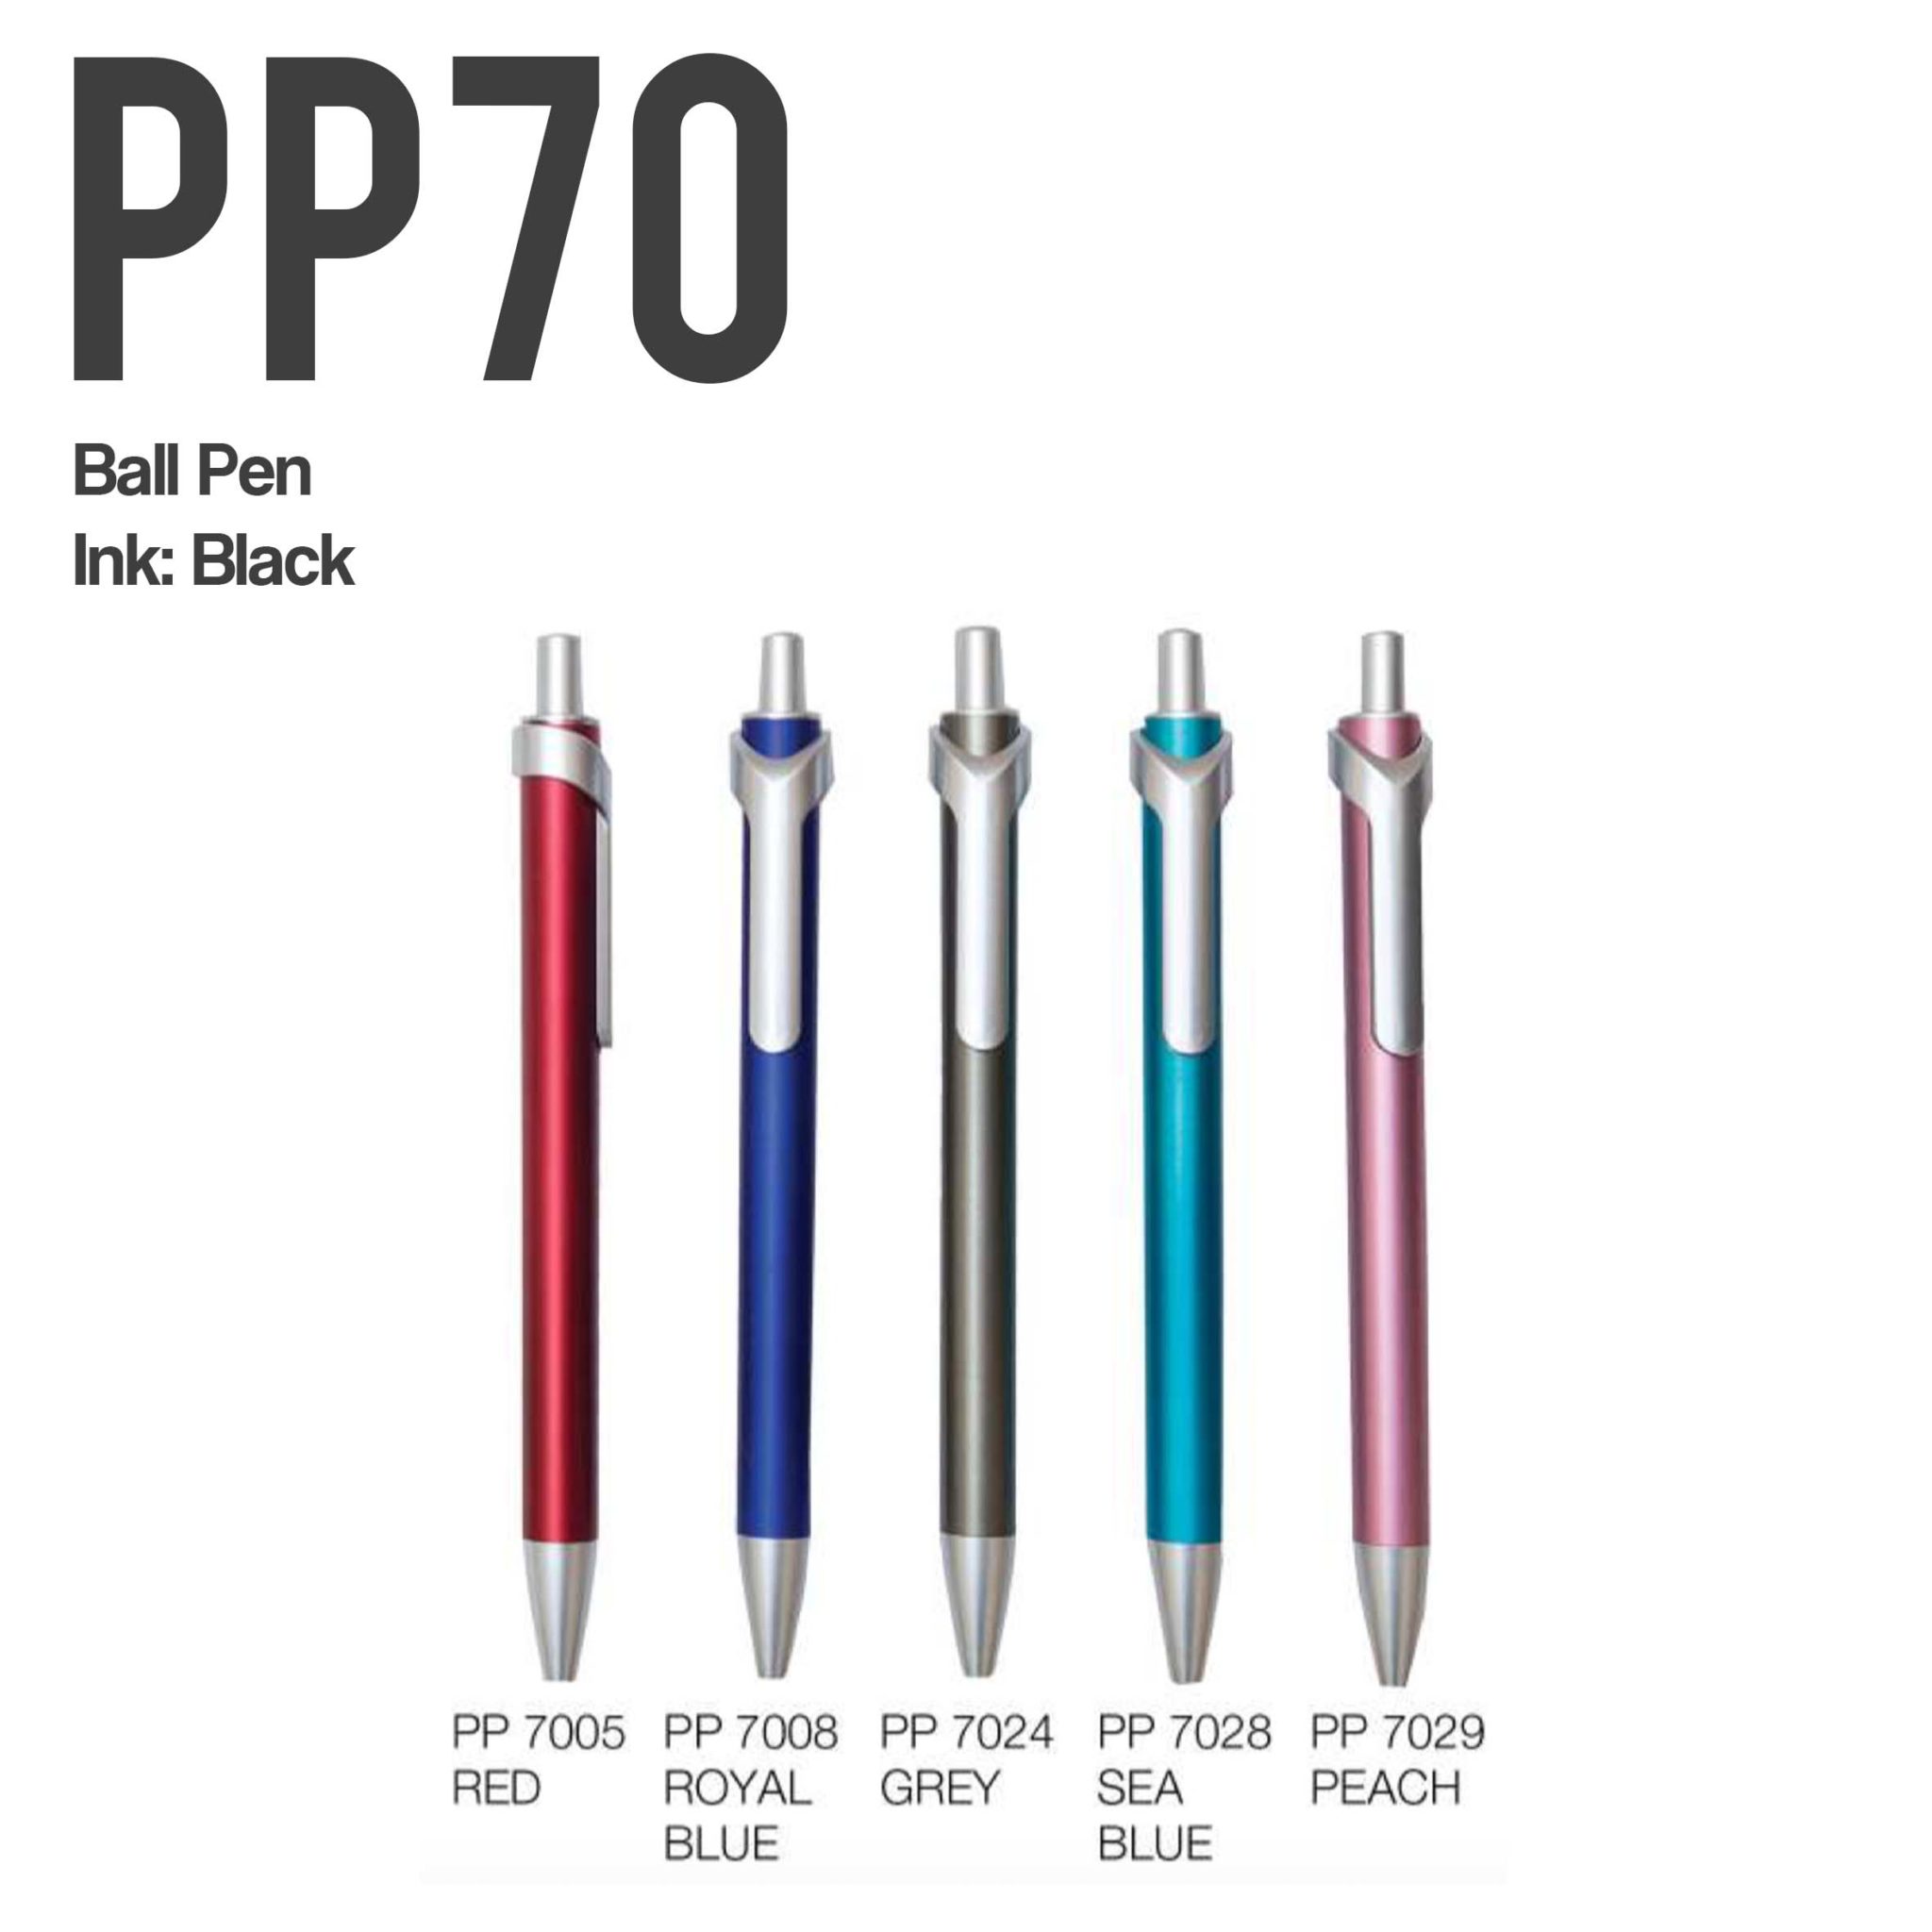 Pp70 plastic pen scaled